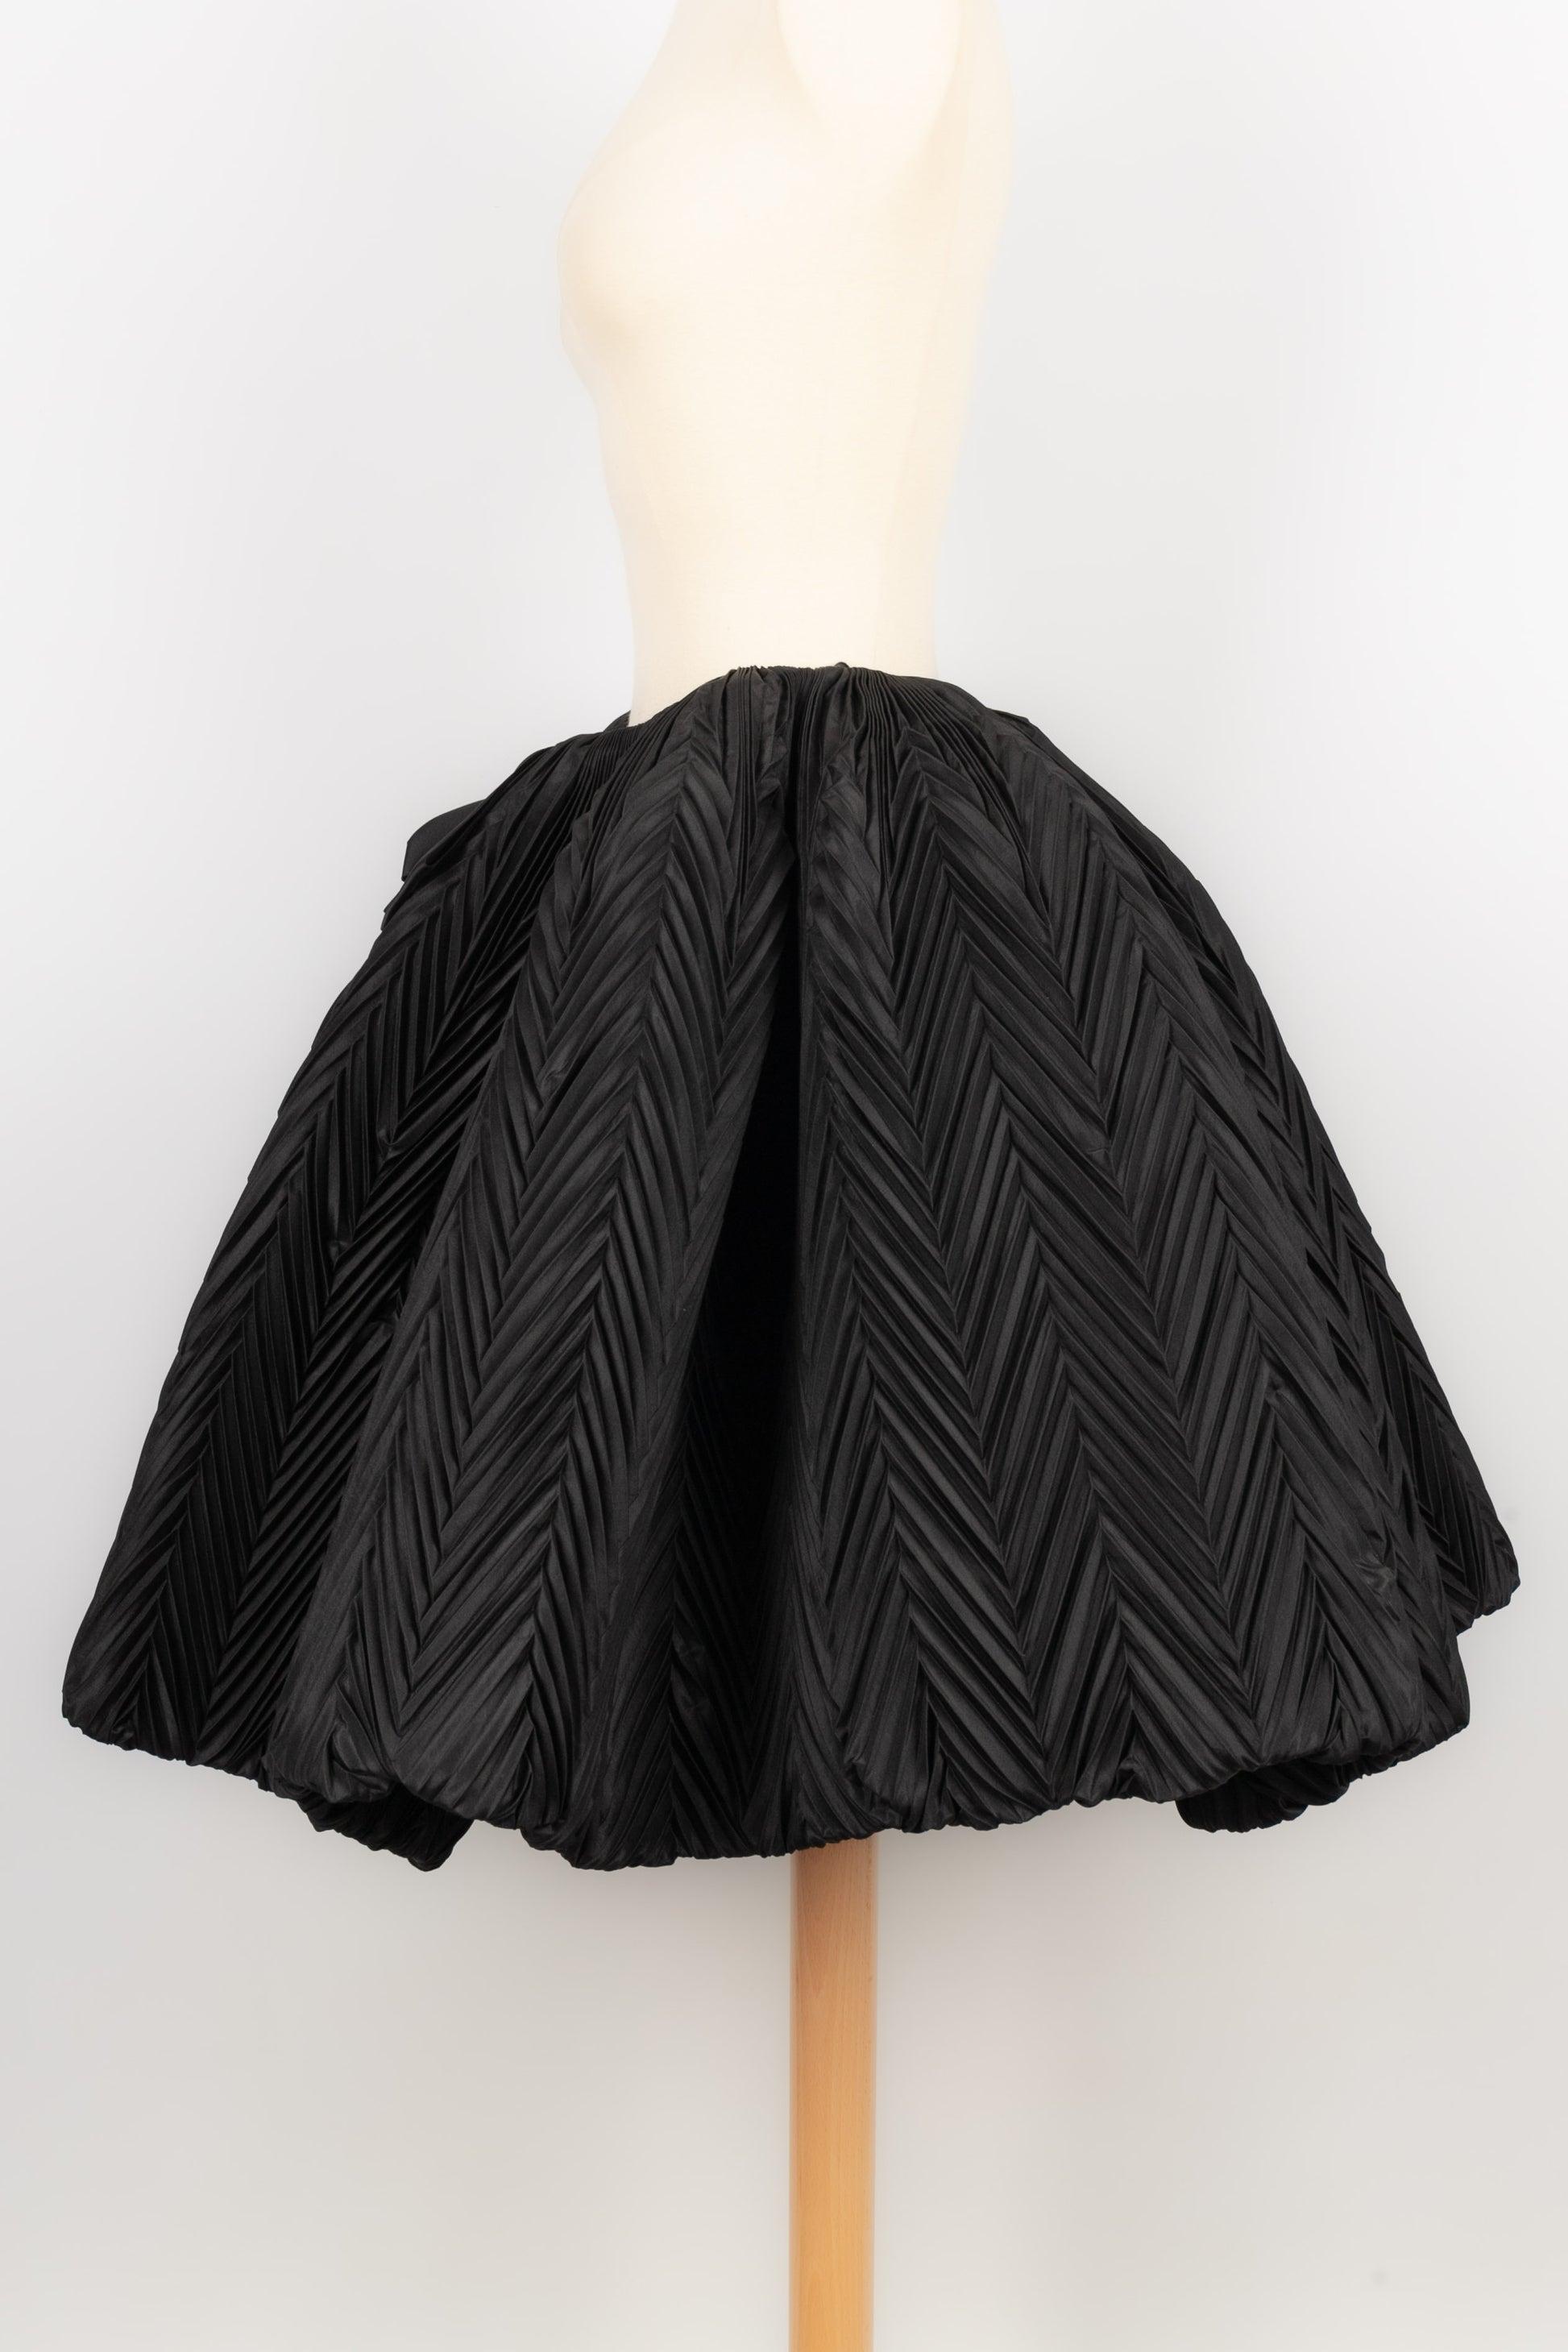 Nina Ricci Haute Couture Kreisrock aus schwarzem Taft mit schwarzem Taftbezug Damen im Angebot